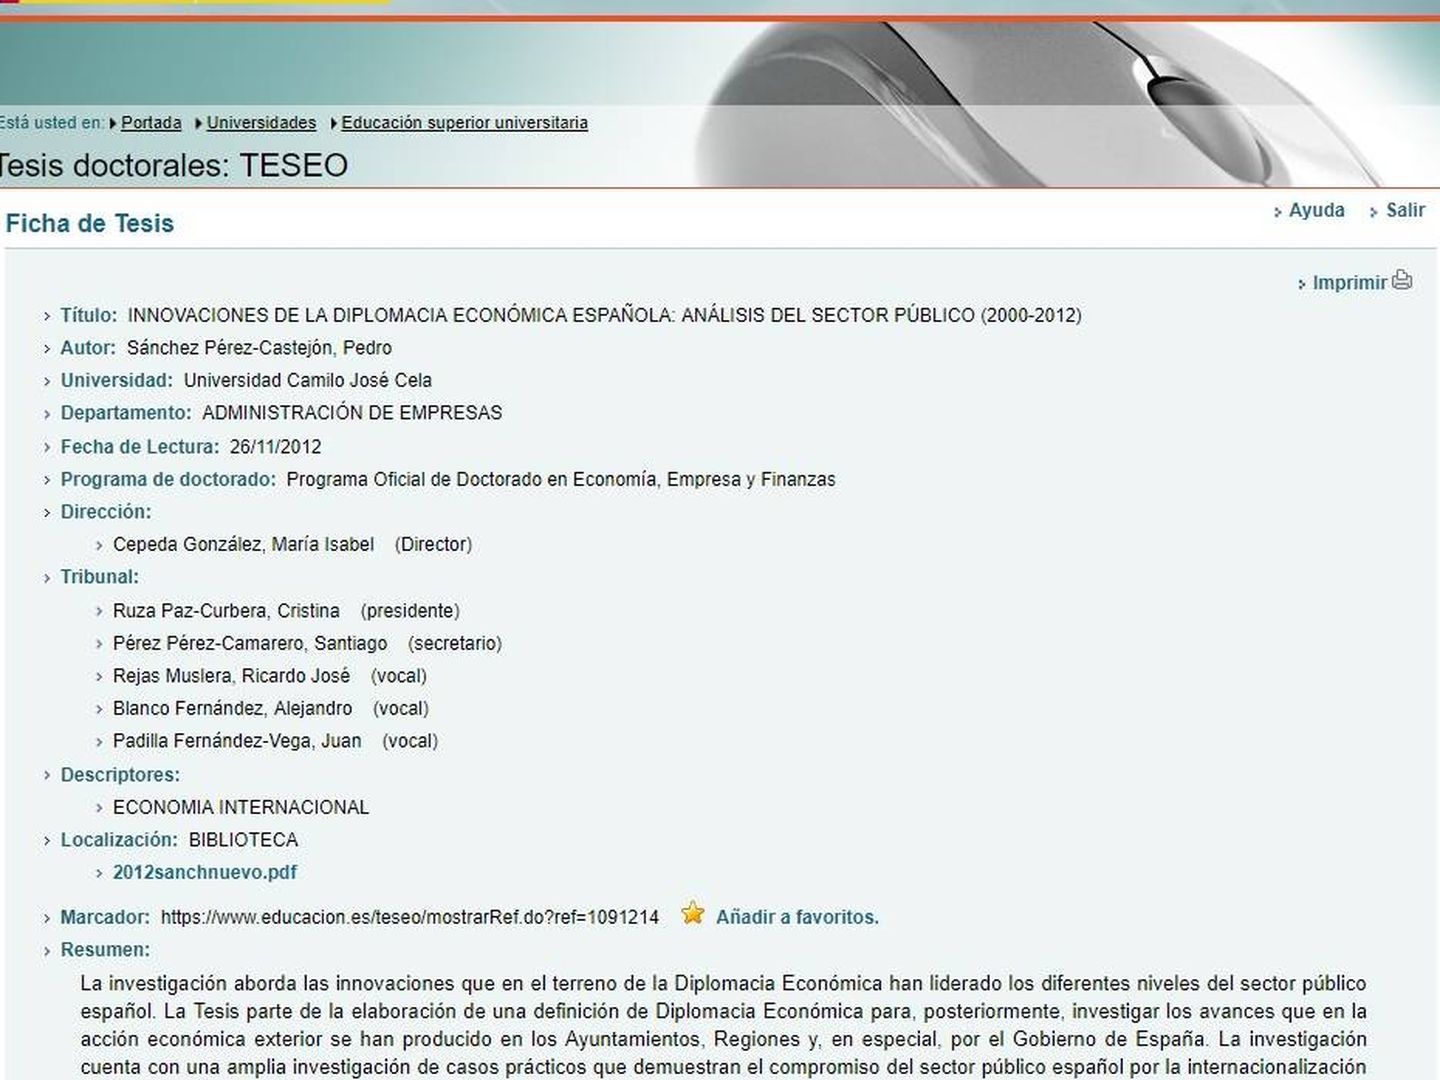 Ficha de la tesis doctoral en la web de TESEO